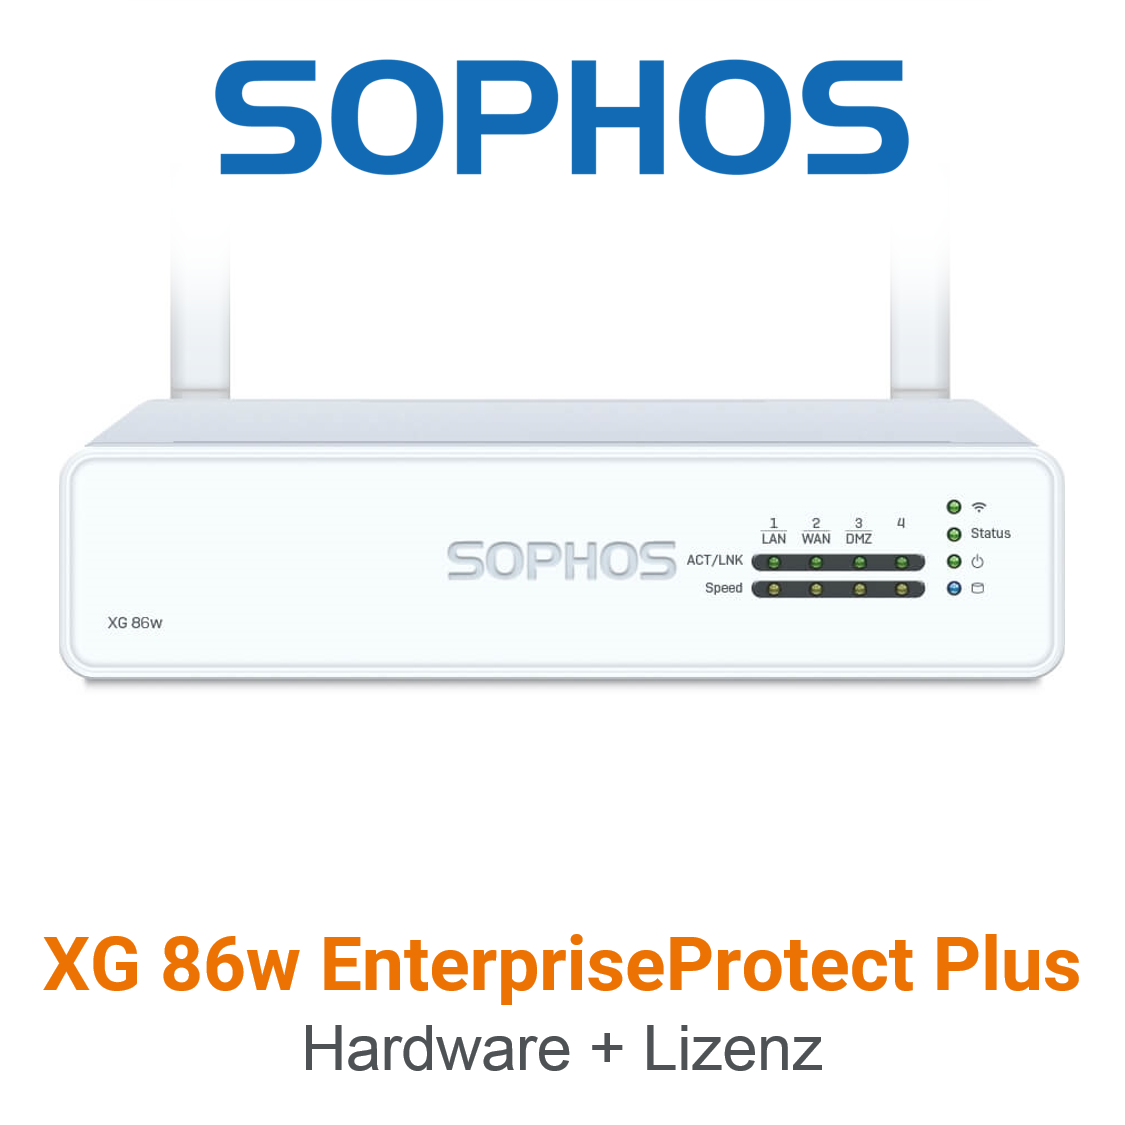 Sophos XG 86w EnterpriseProtect Plus Bundle (Hardware + Lizenz)